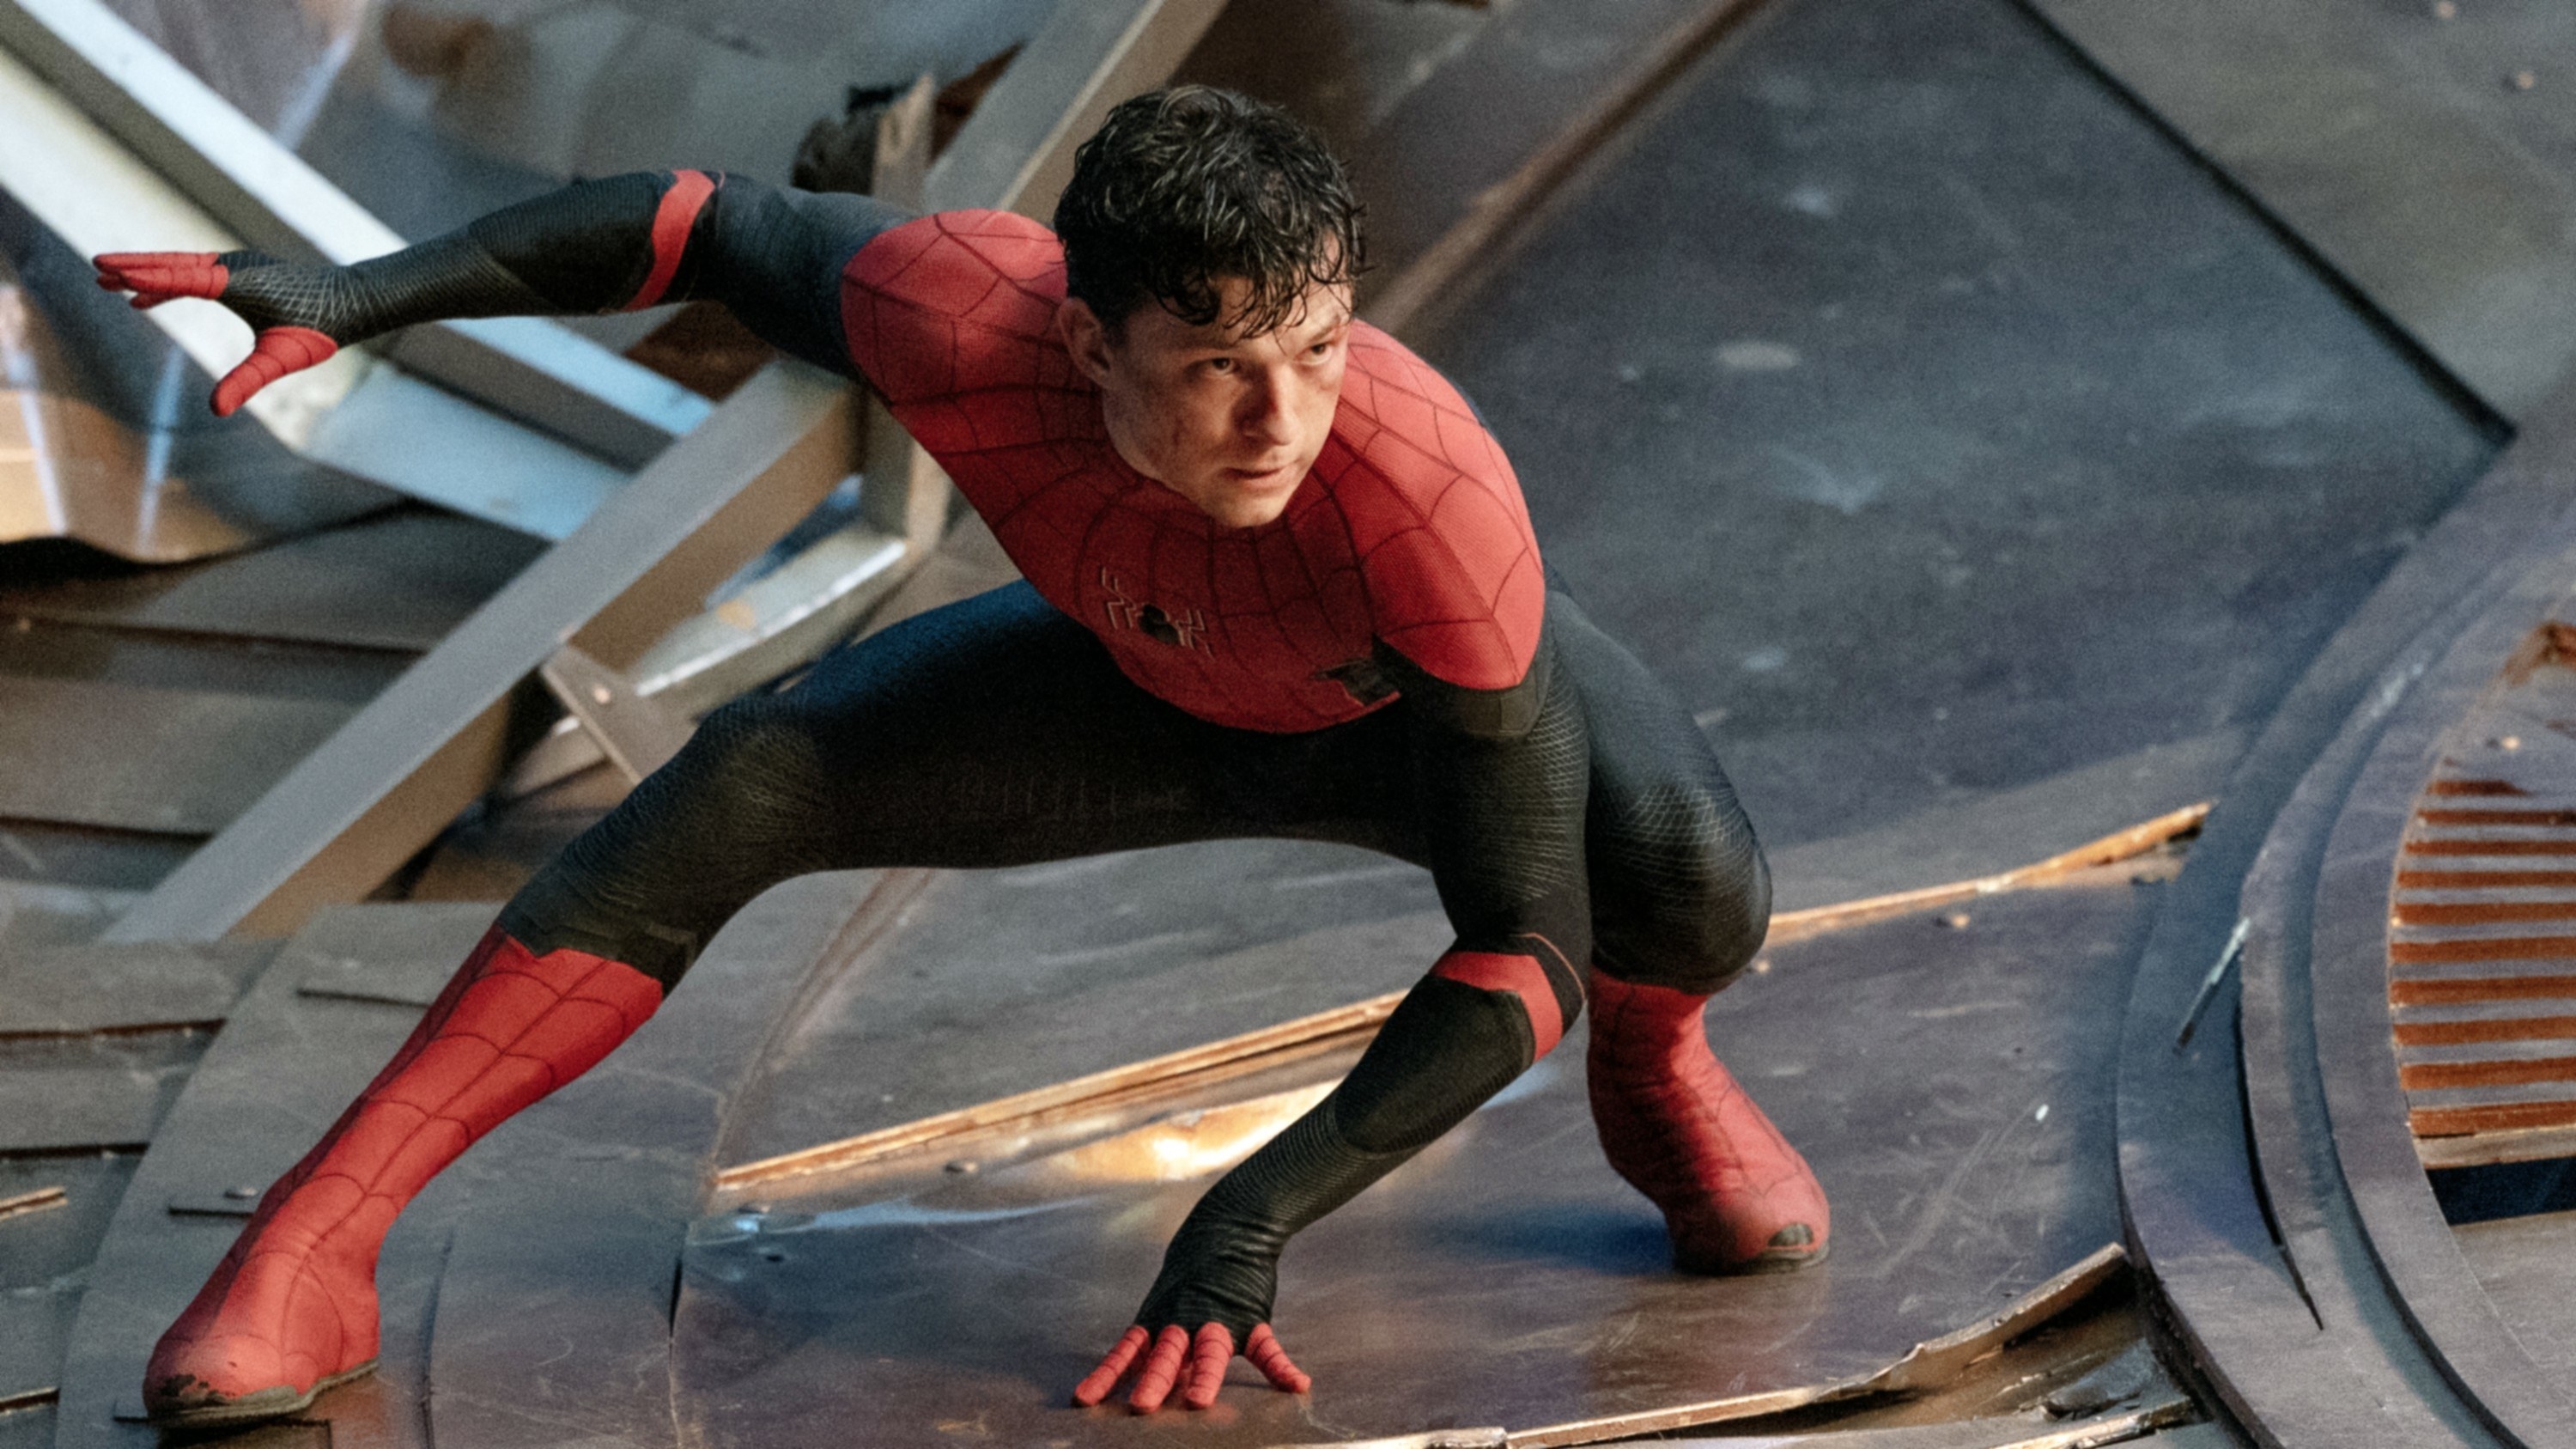 Tom crouching as Spider-Man